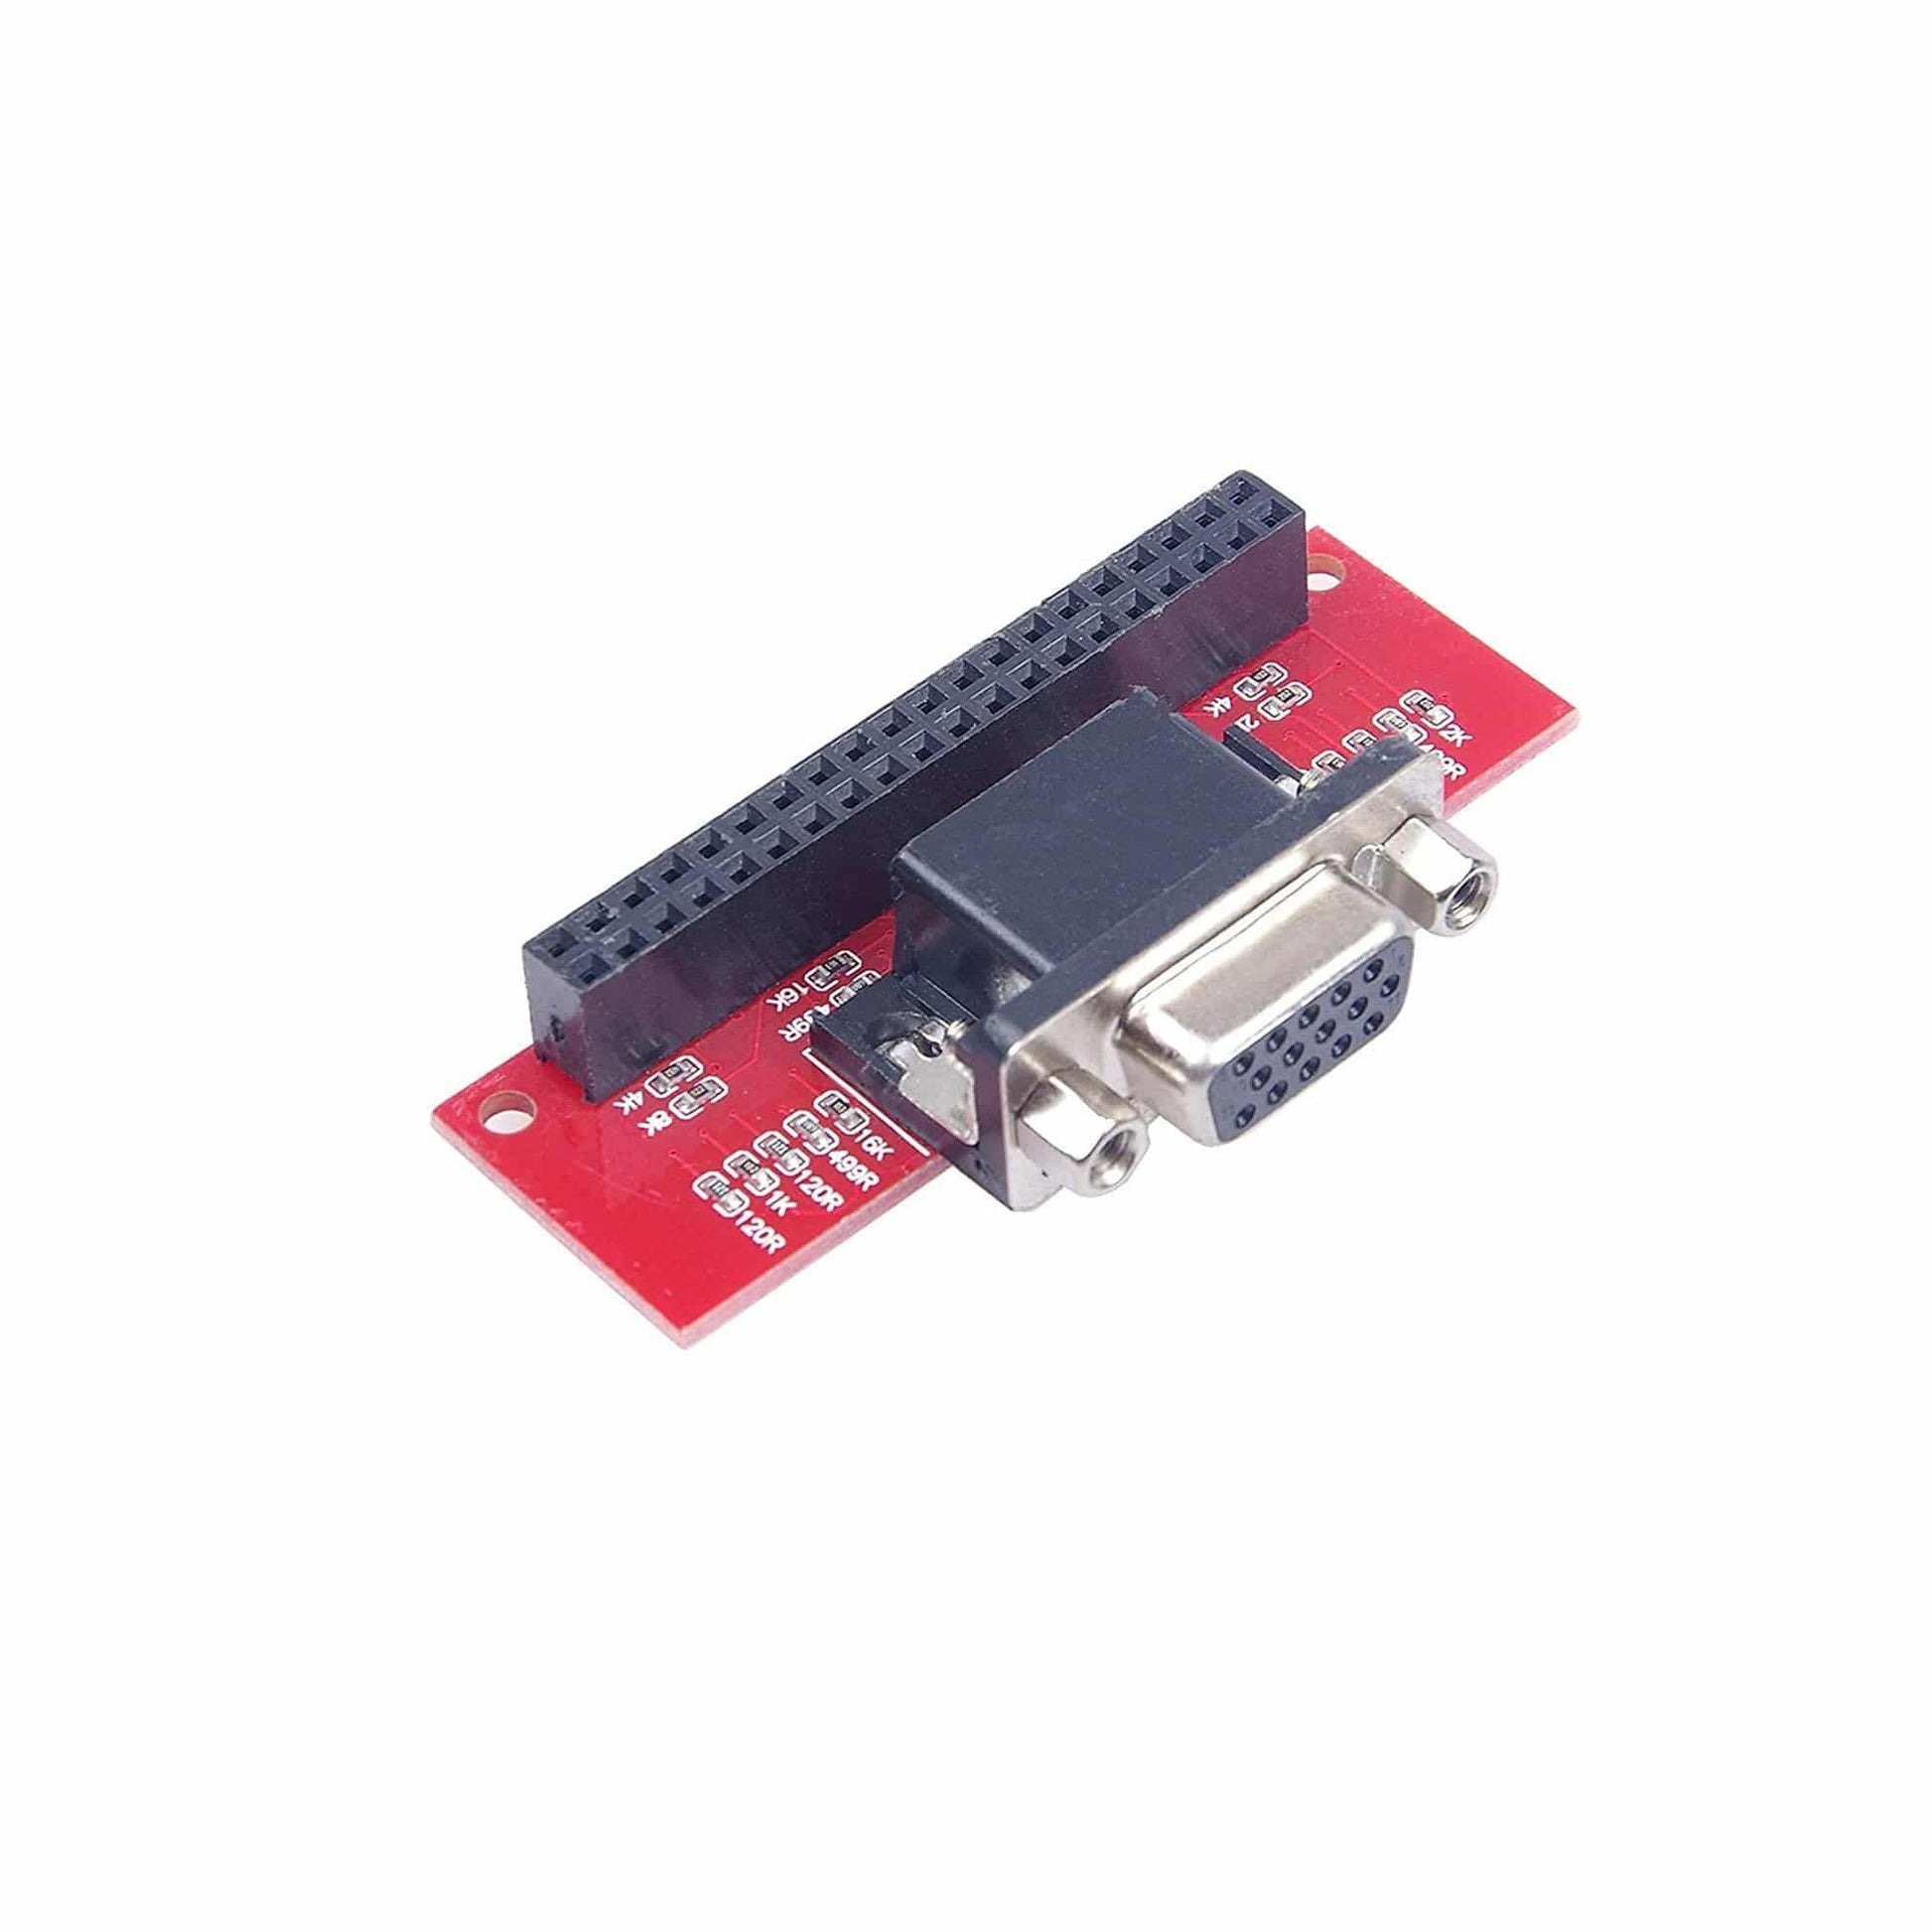 Raspberry Pi VGA666 Adapter Board for Pi 3 Model B/B+/A+